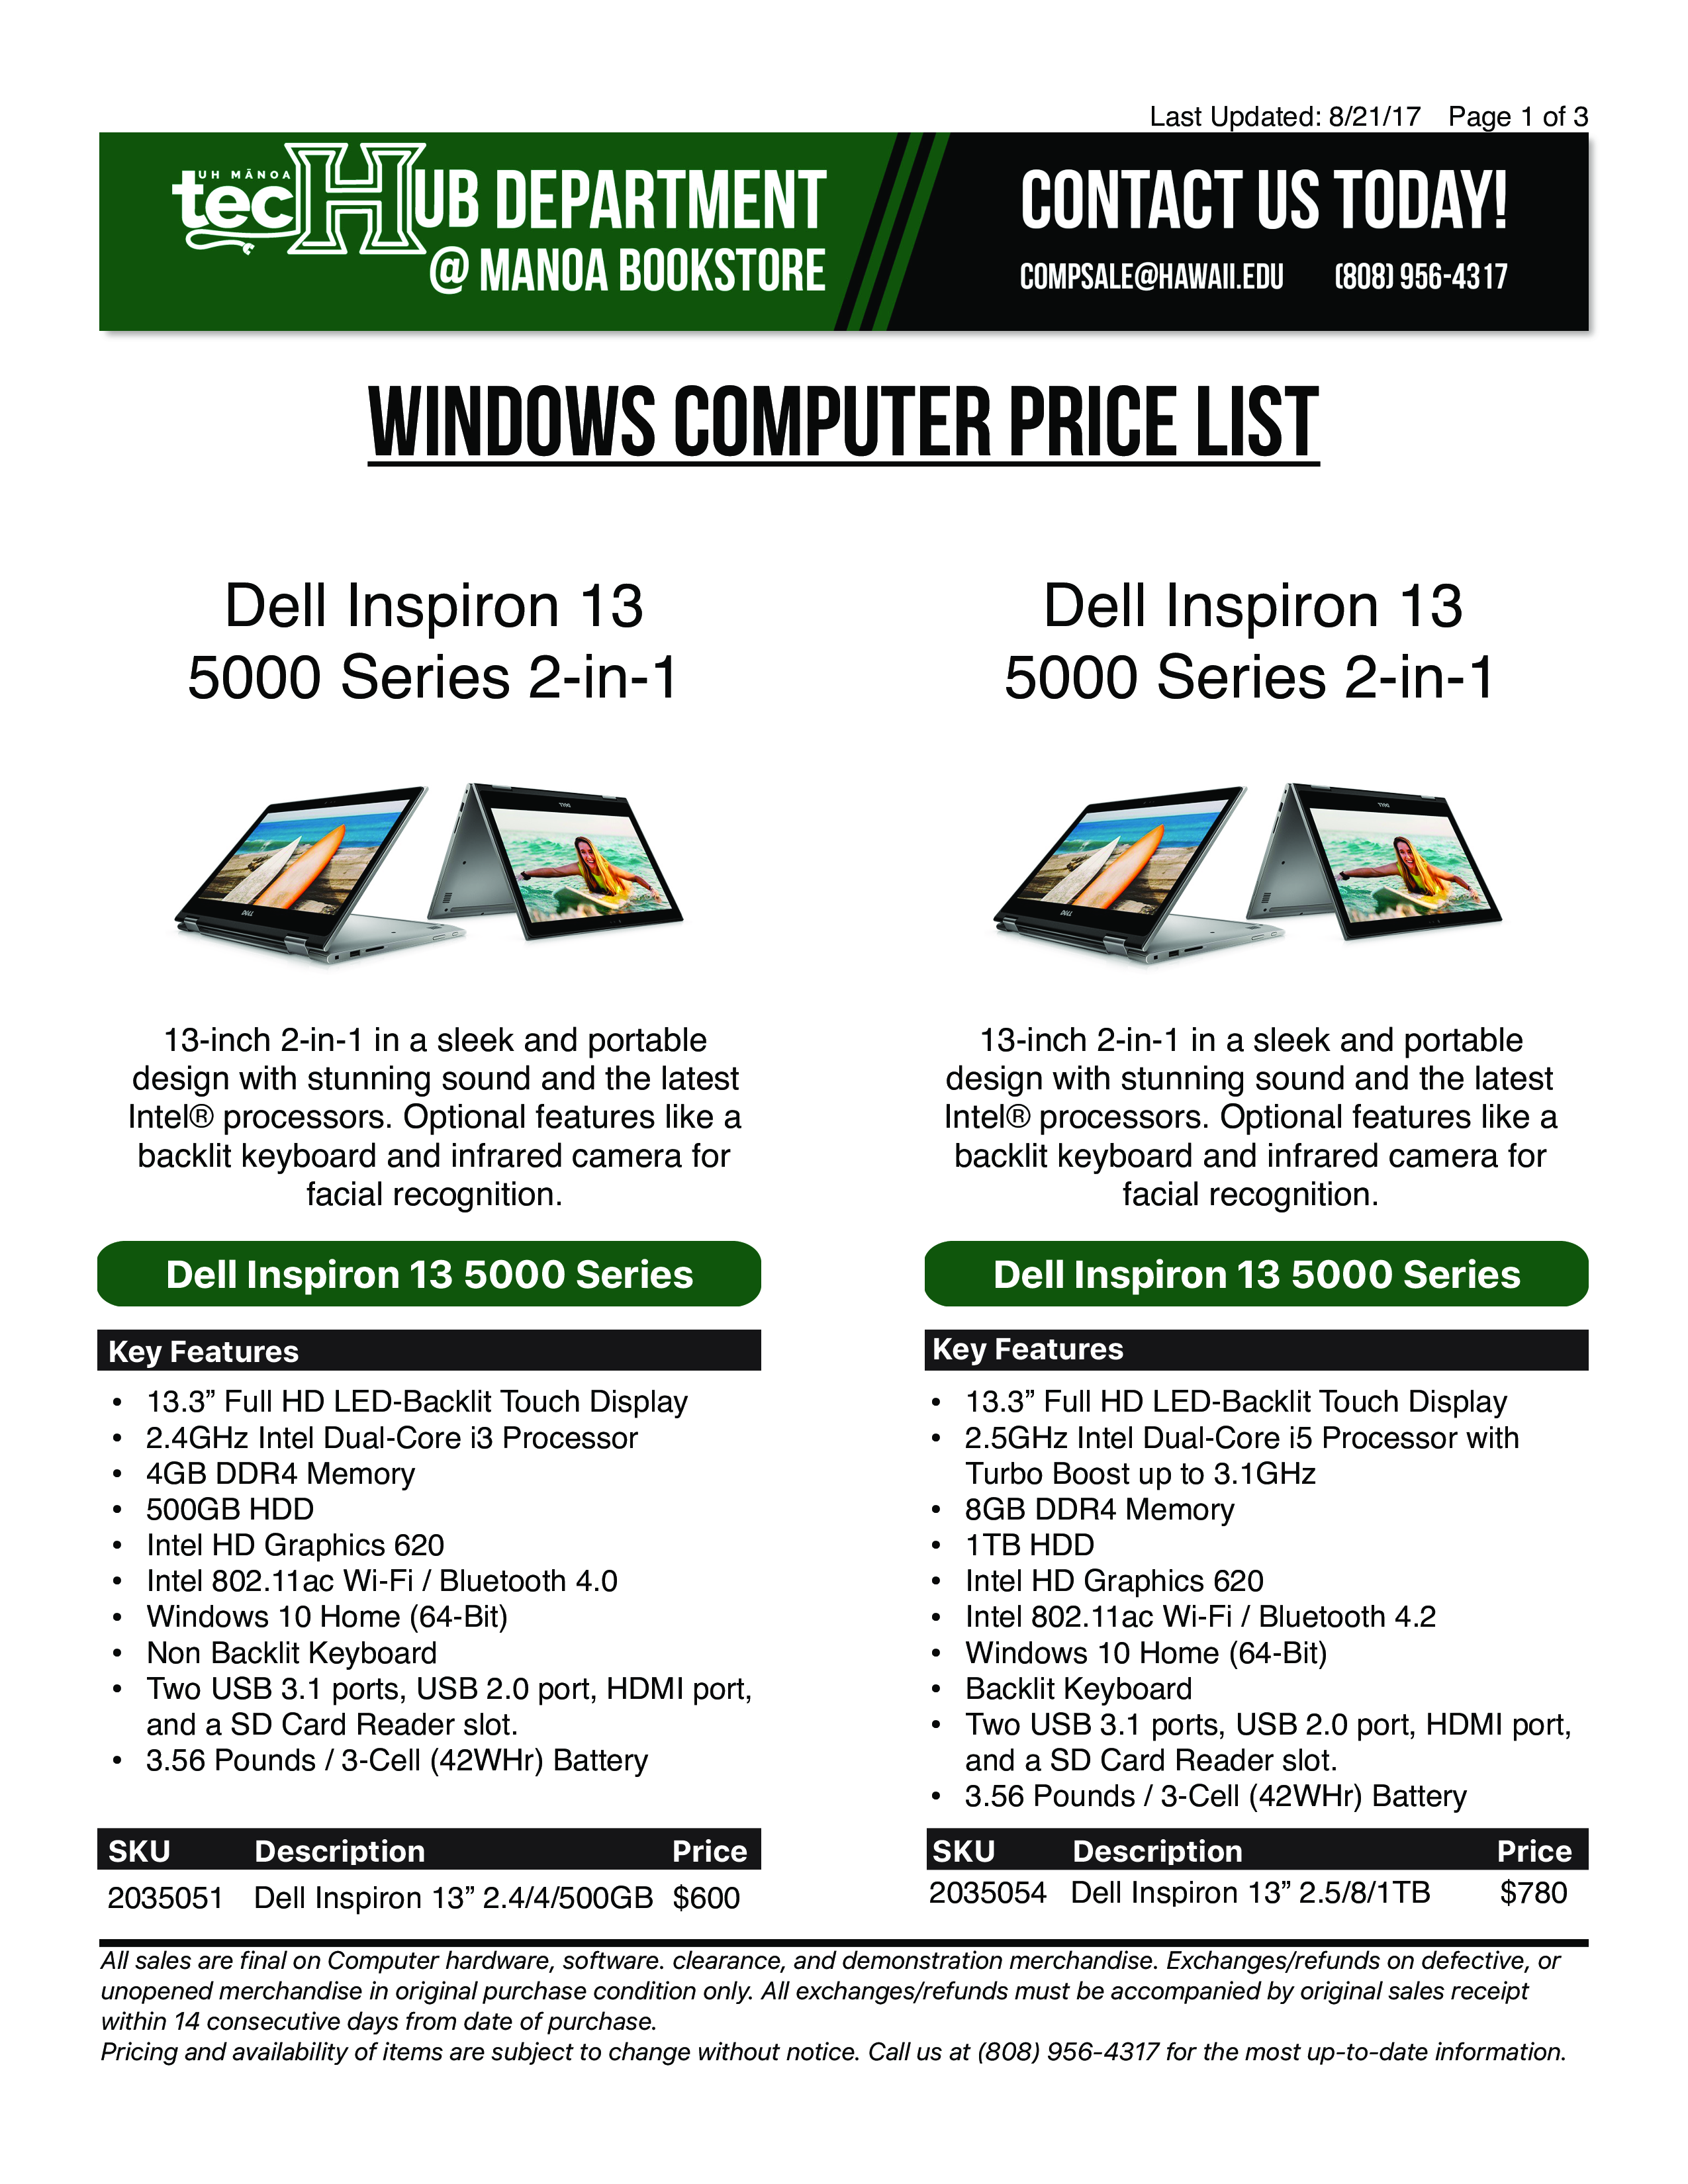 Windows Computers Price List 模板